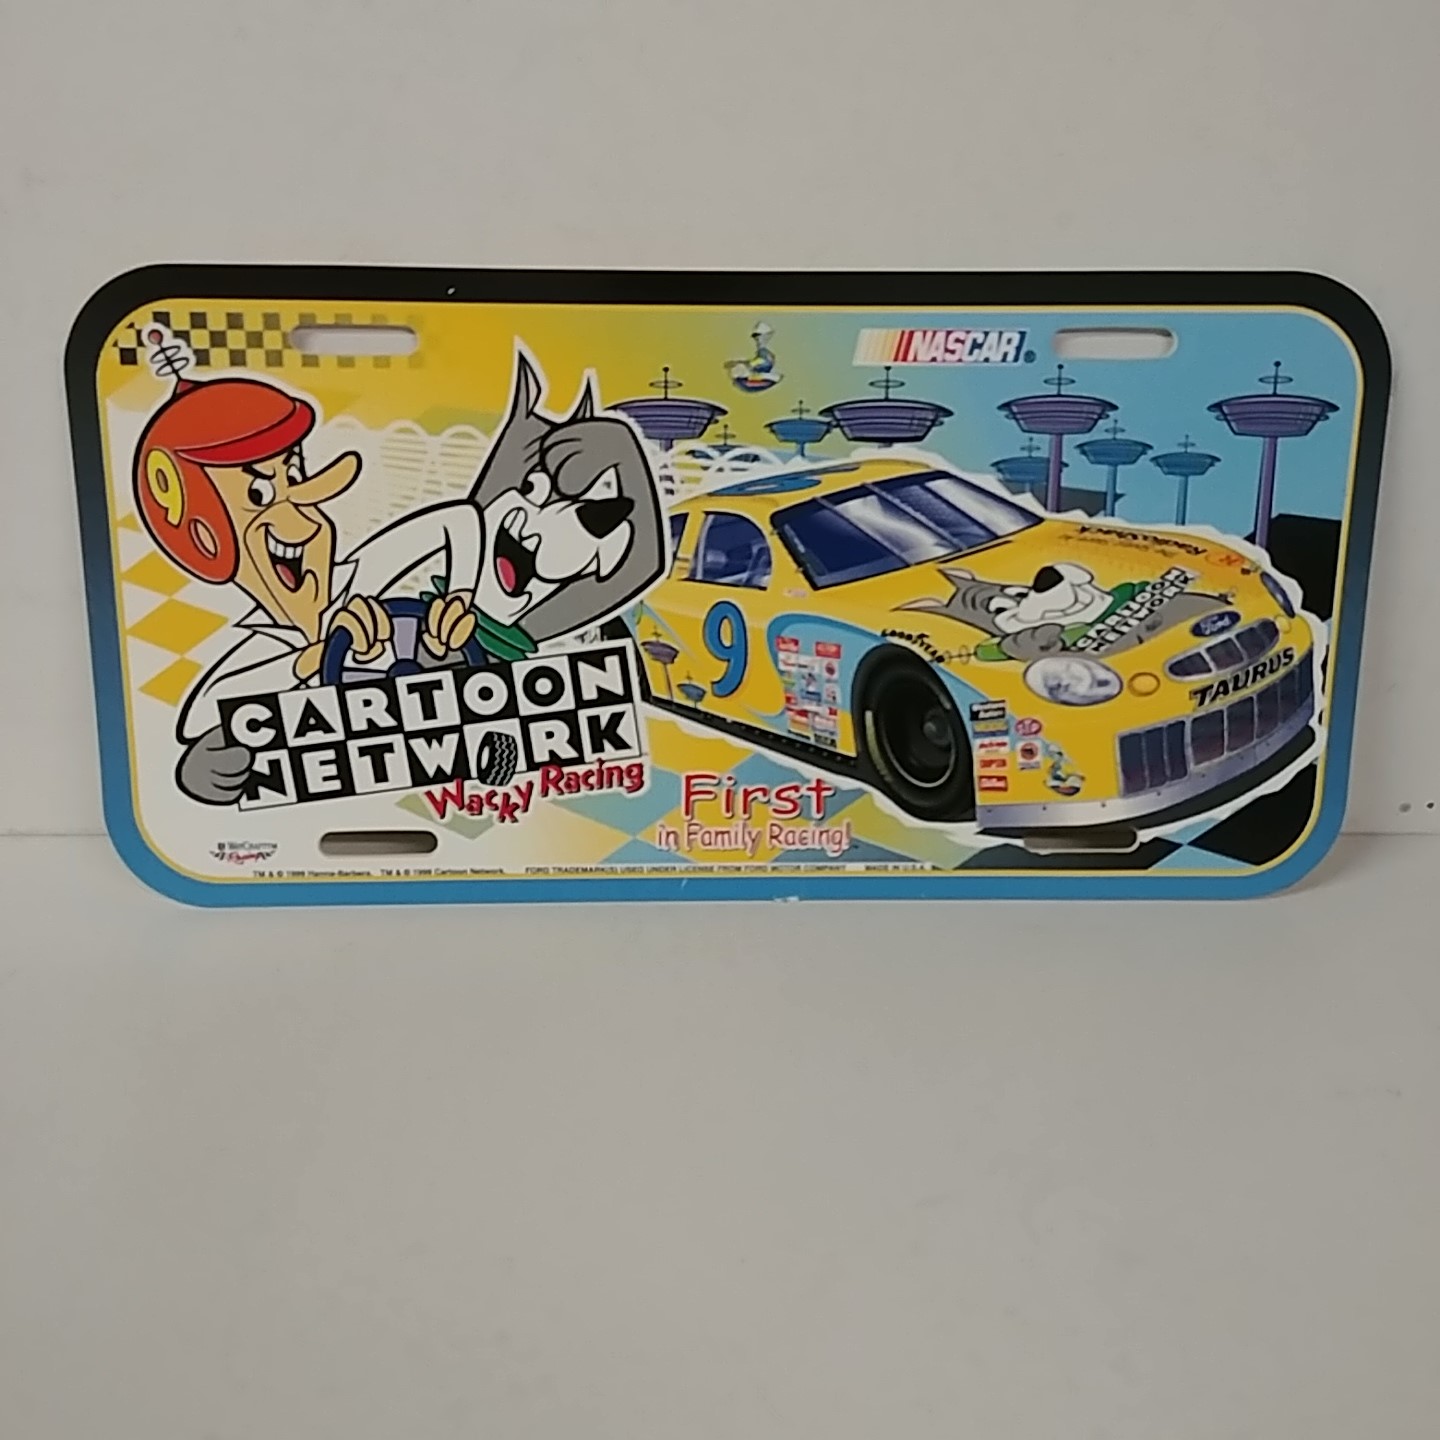 1999 Jerry Nadeau Cartoon Network plastic license plate